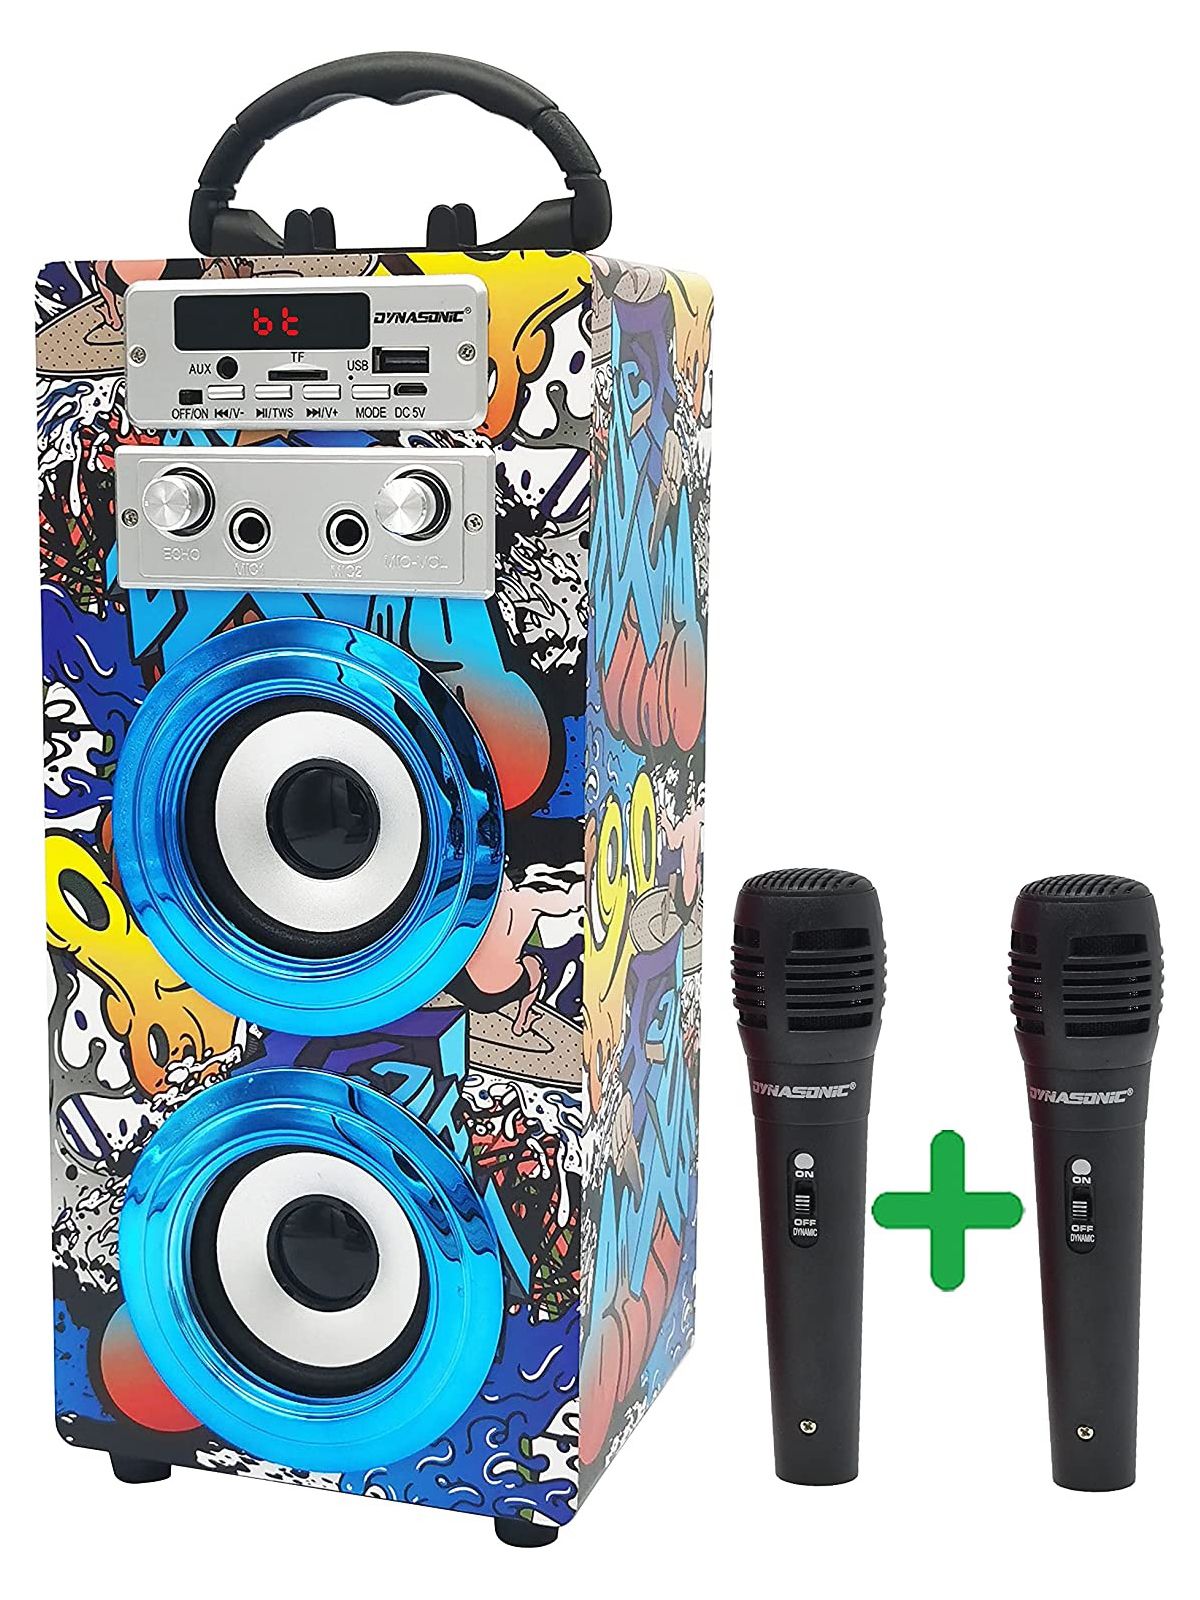 Altavoz Bluetooth Karaoke Serie 025-10 con 2 Micrófonos y luces discoteca  incluidos - Eleciti